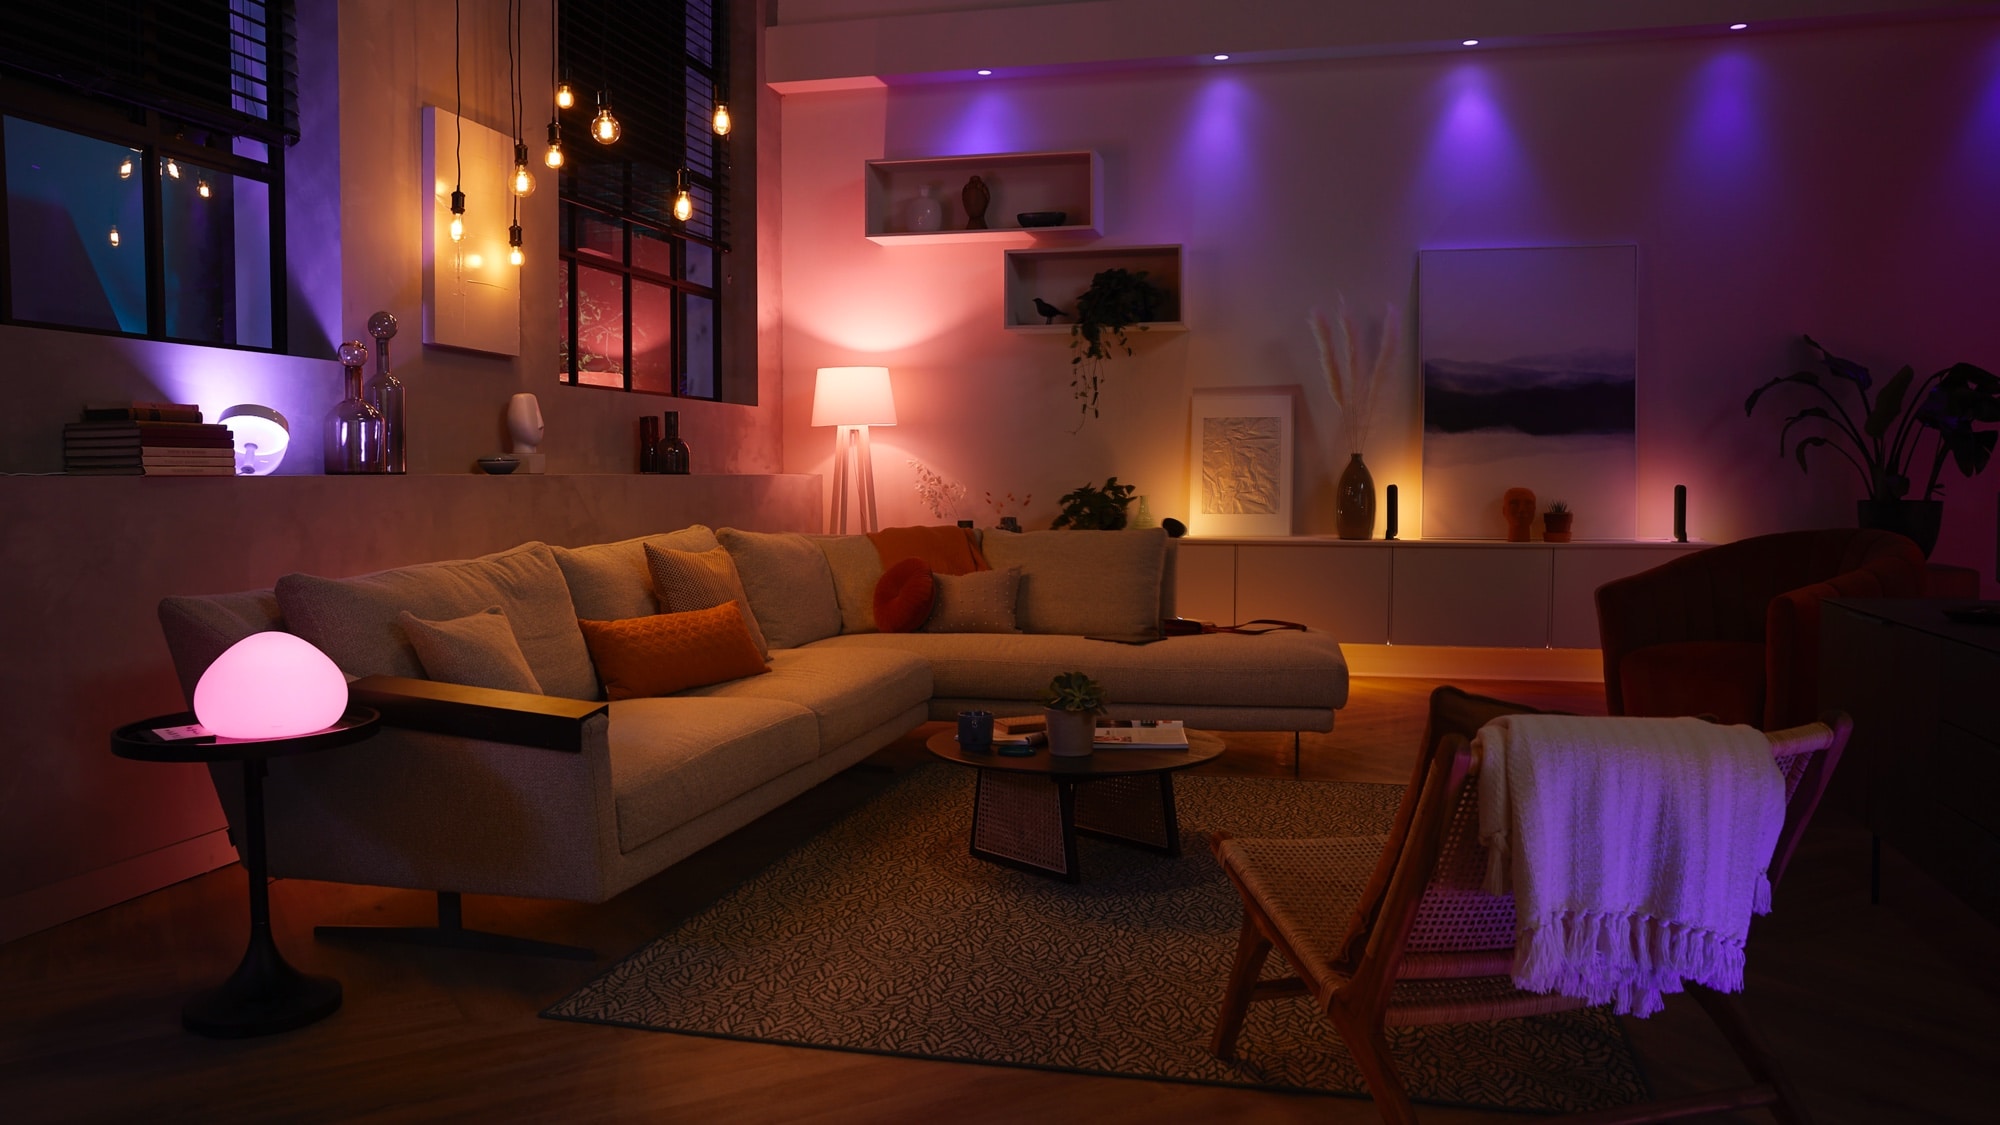 https://www.philips-hue.com/content/dam/hue/masters/explore-hue/blog/living-room-smart-lights-16-9.jpg